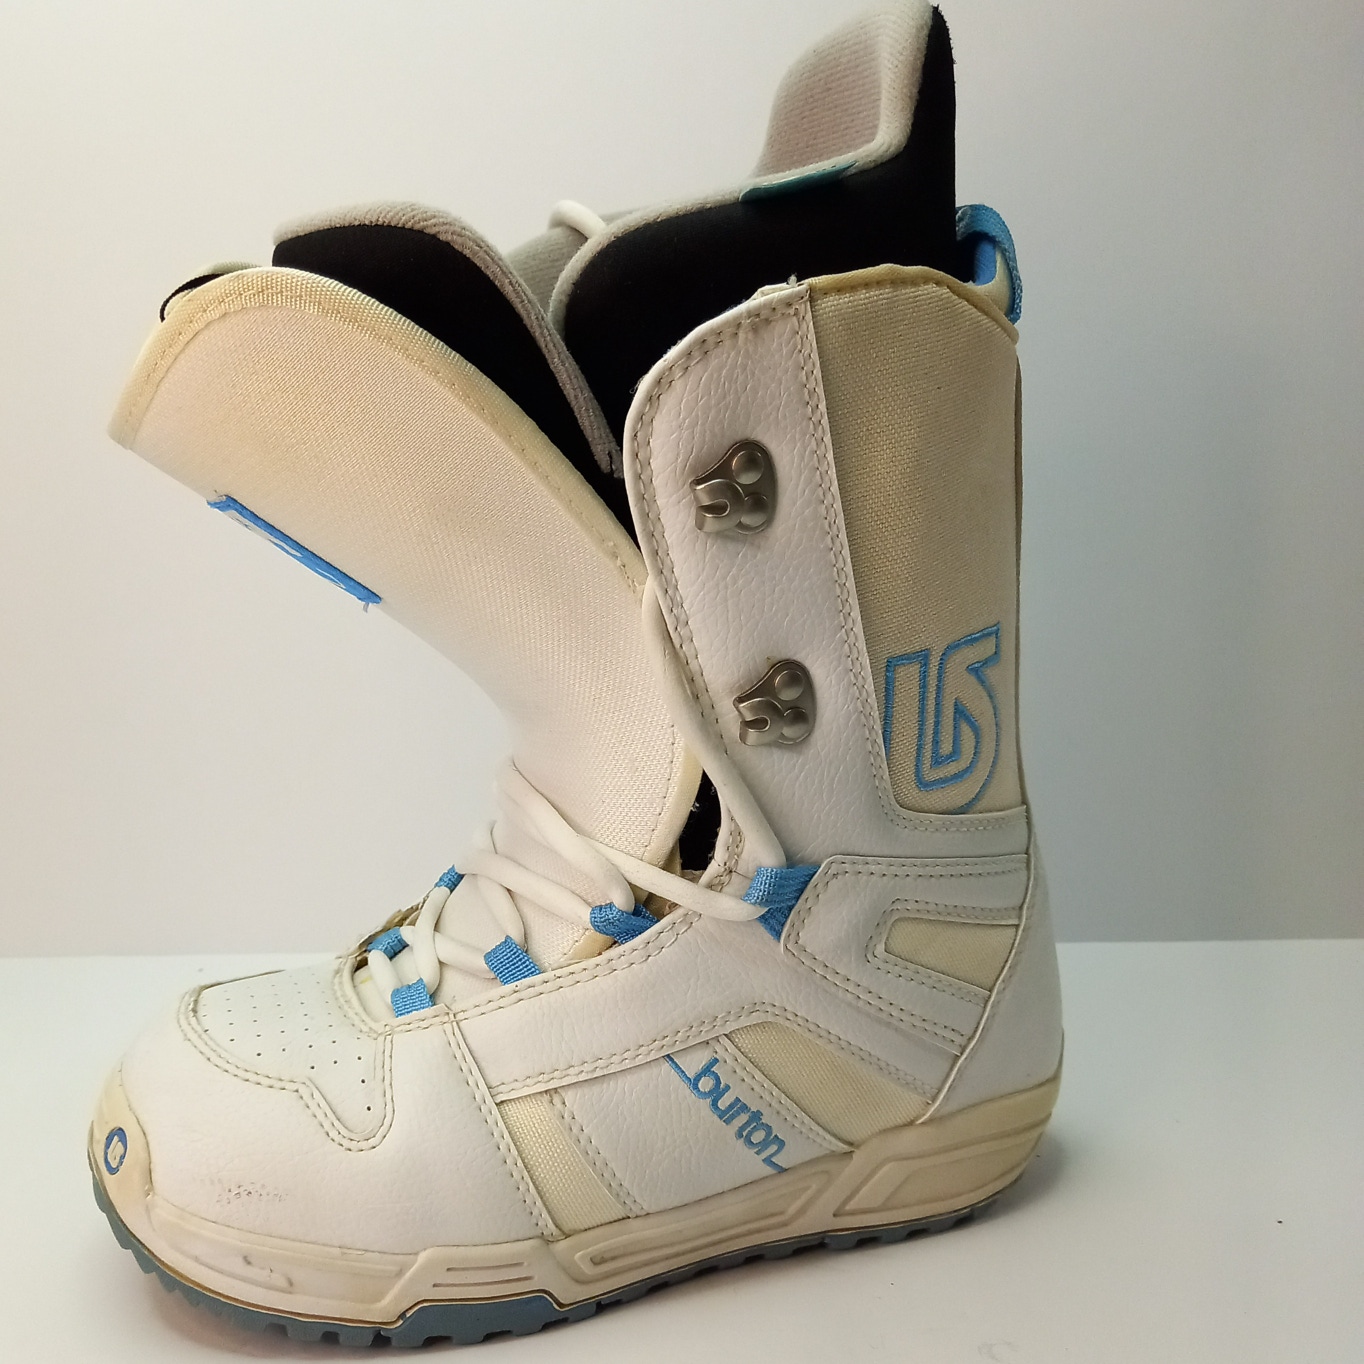 Women's Used Size 5.0 (Women's 6.0) Burton Casa Snowboard Boots